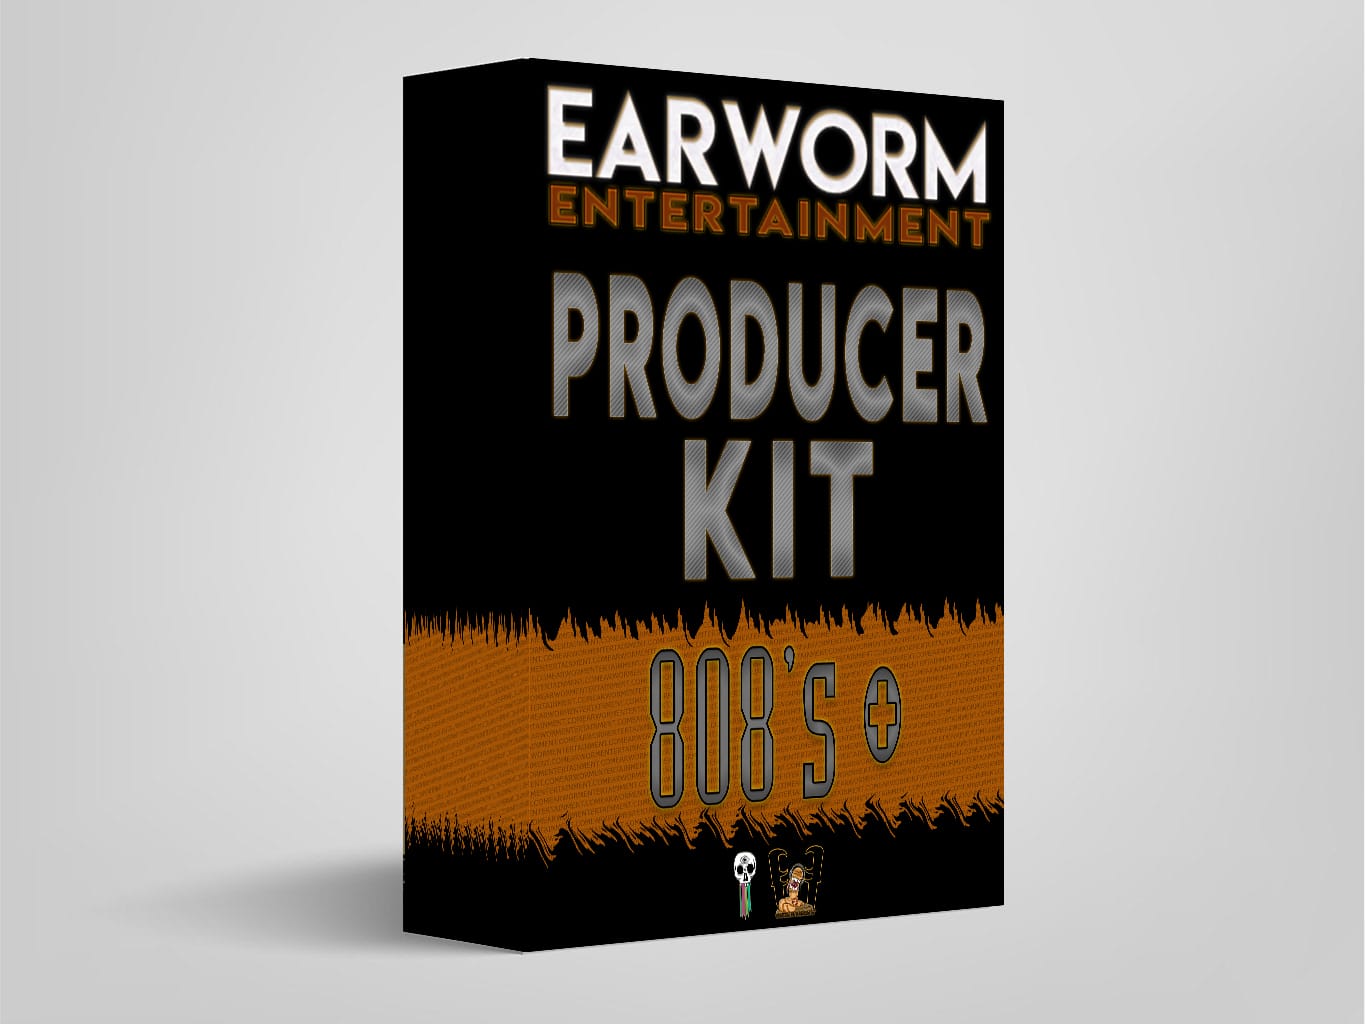 Earworm 808s Plus Kit